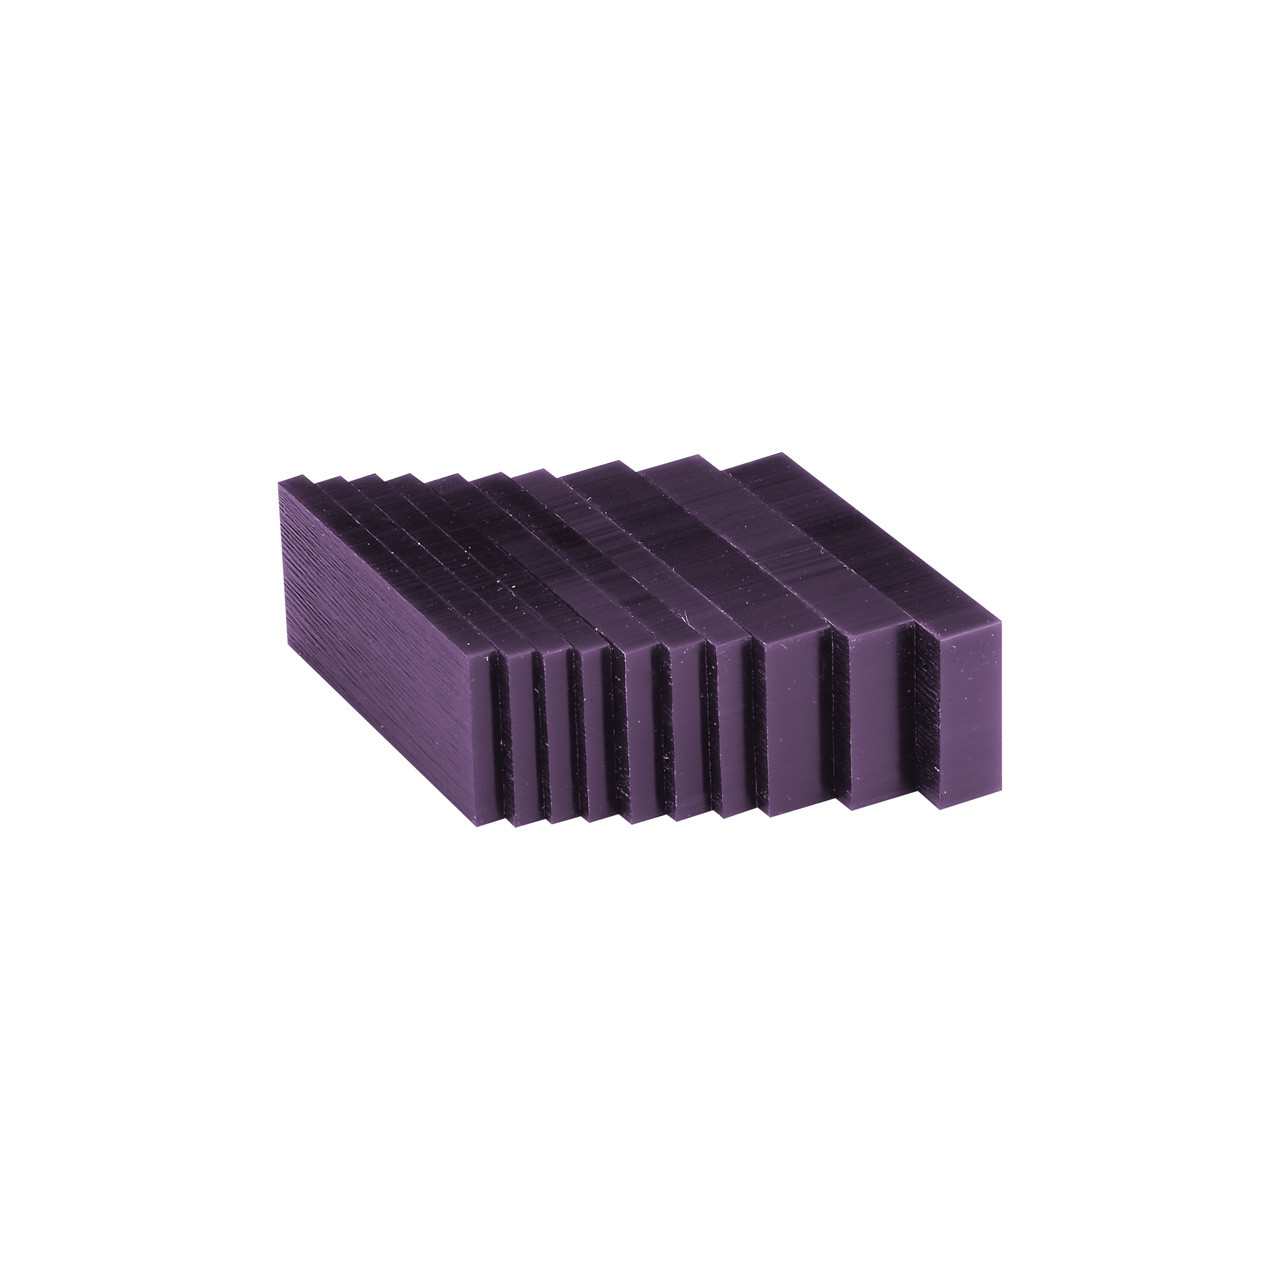 Matt™ Carving Wax Blocks & Slices - 1/2 lb. Slices Purple